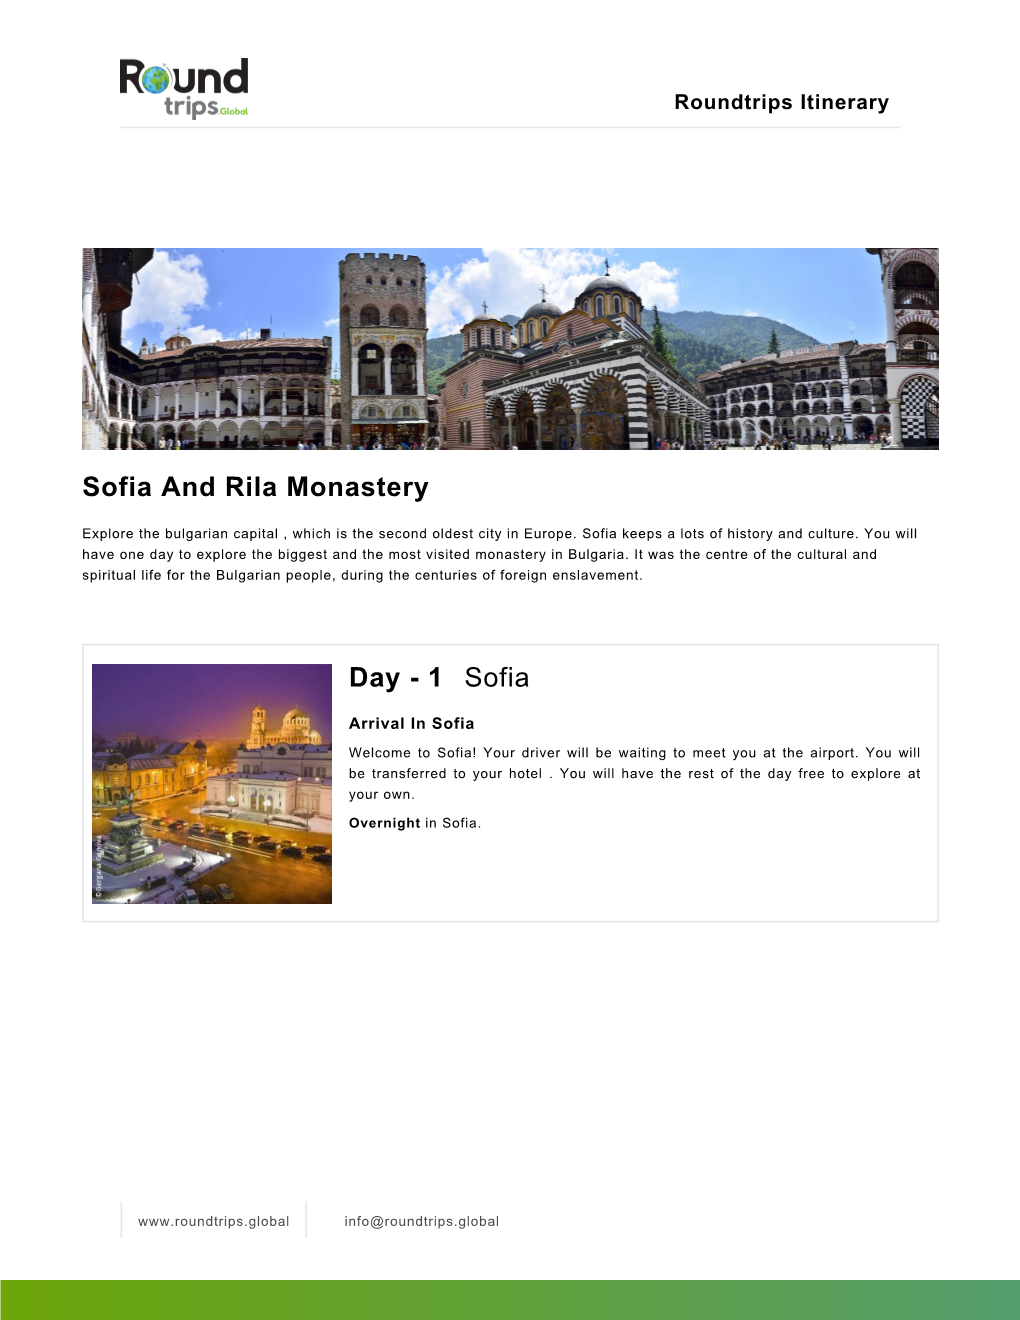 Sofia and Rila Monastery